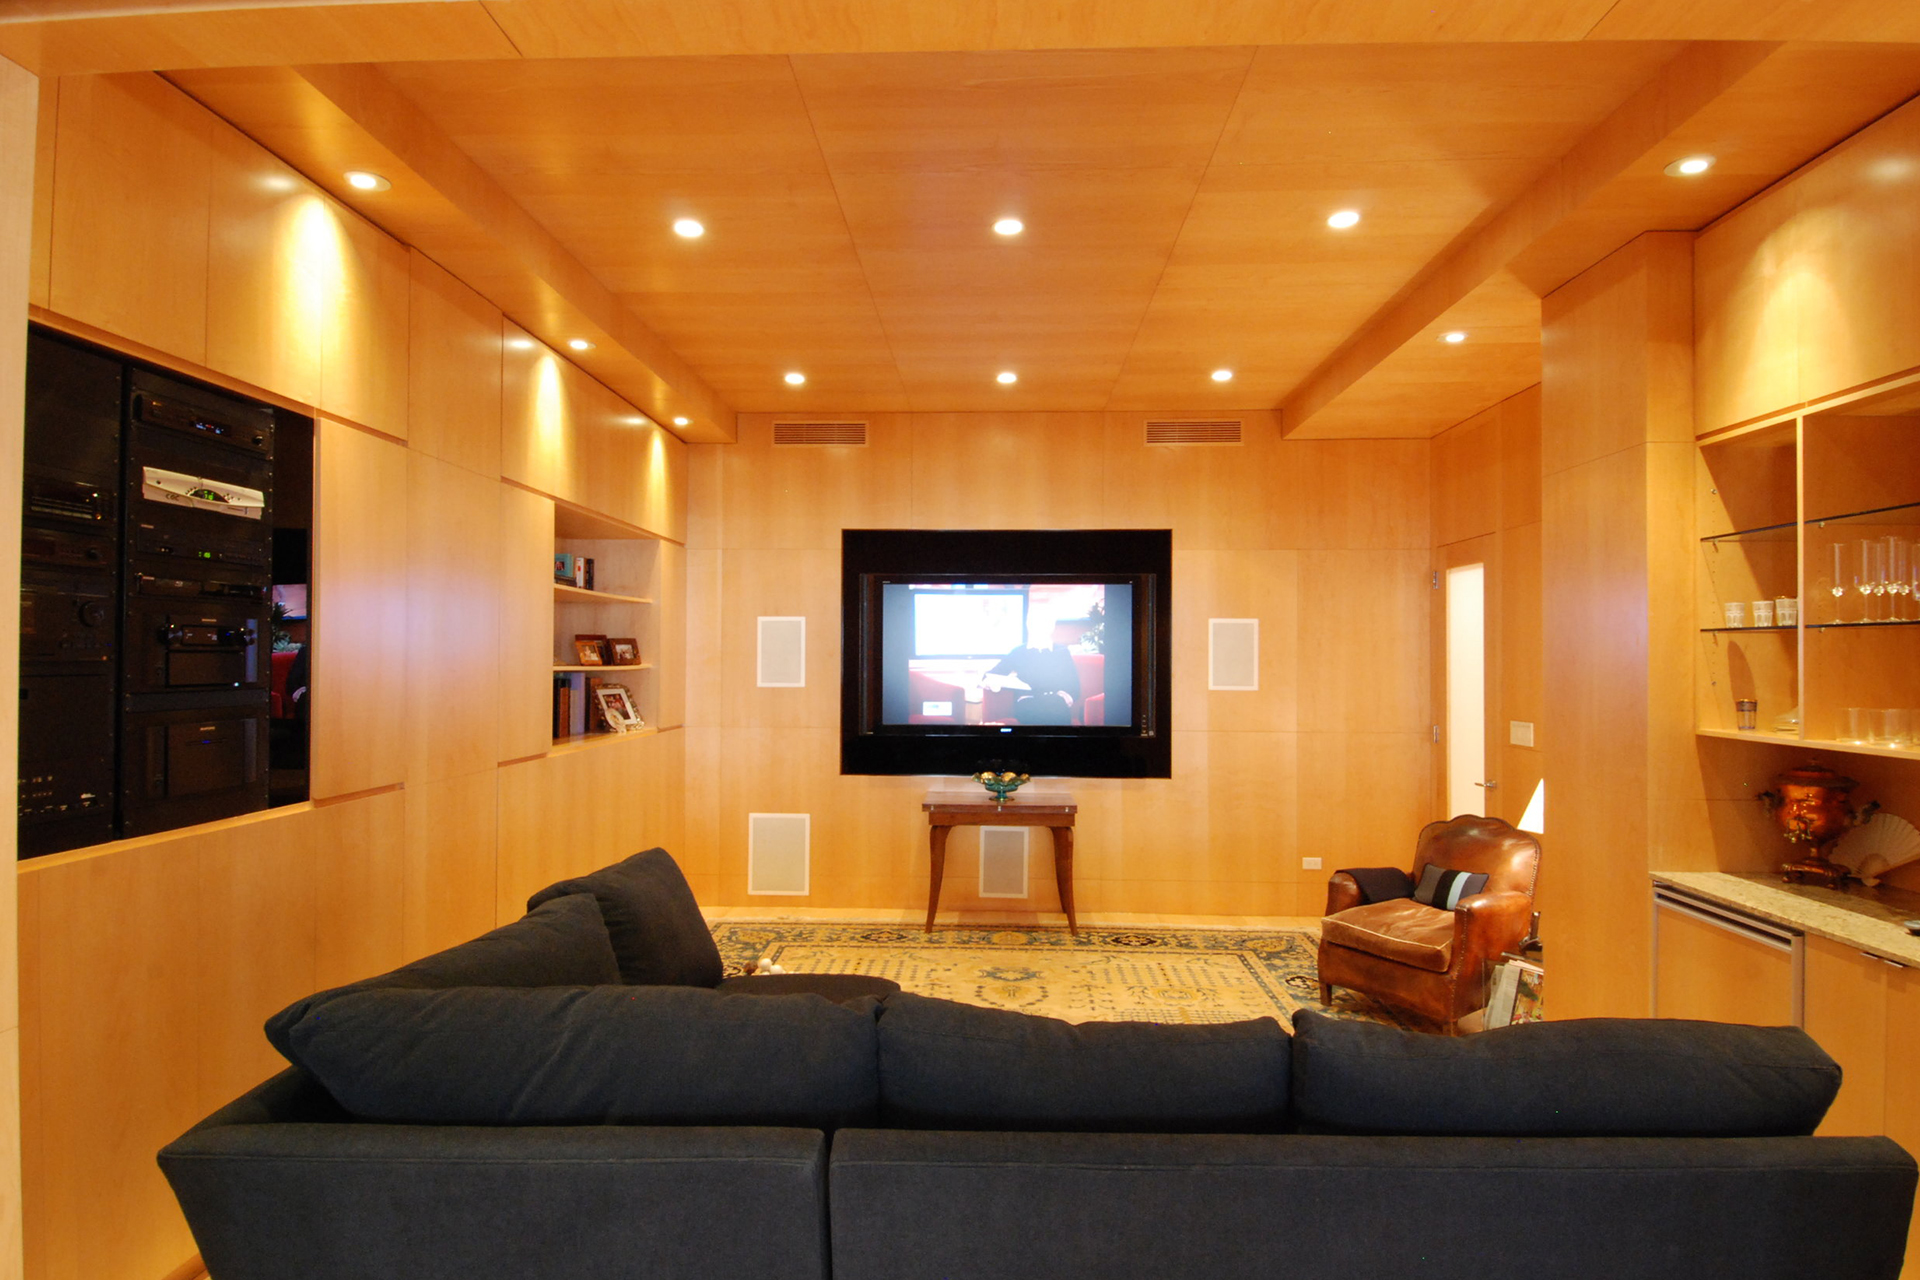 SOHO Loft - TV Room Renovation